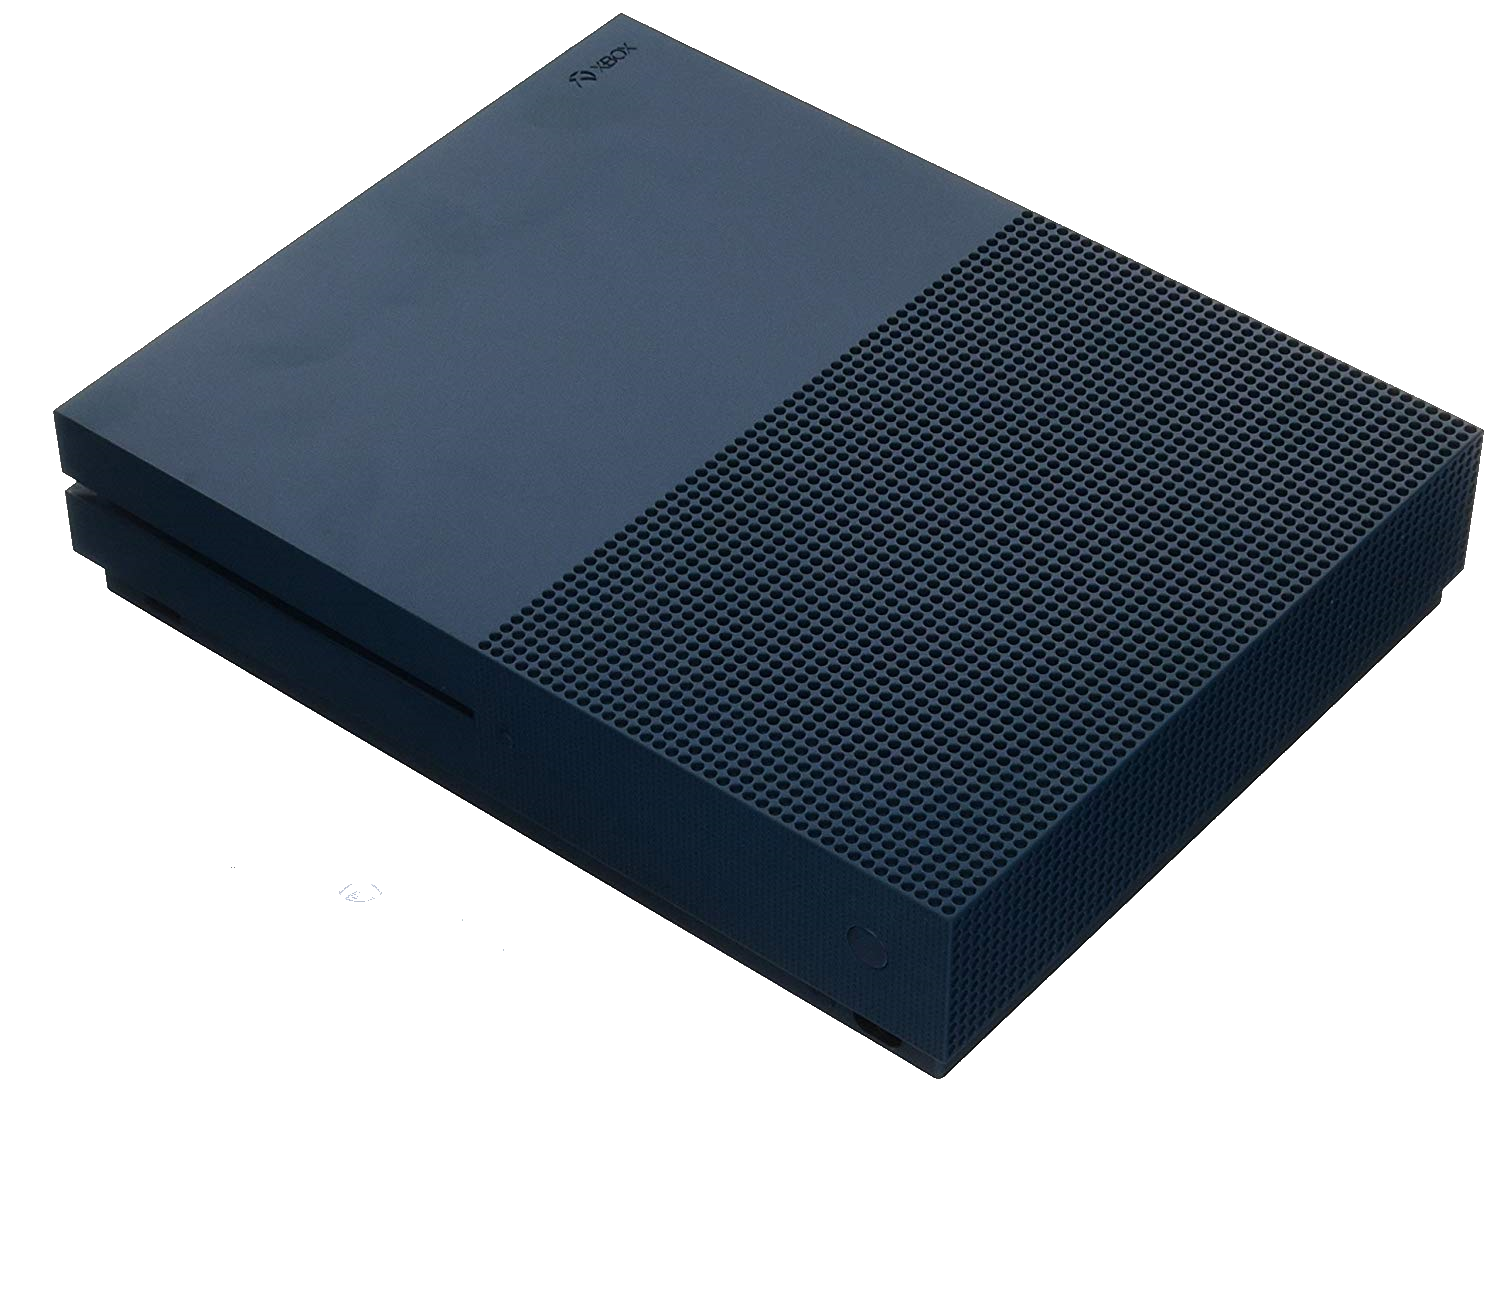 Xbox One S Deep Blue Edition